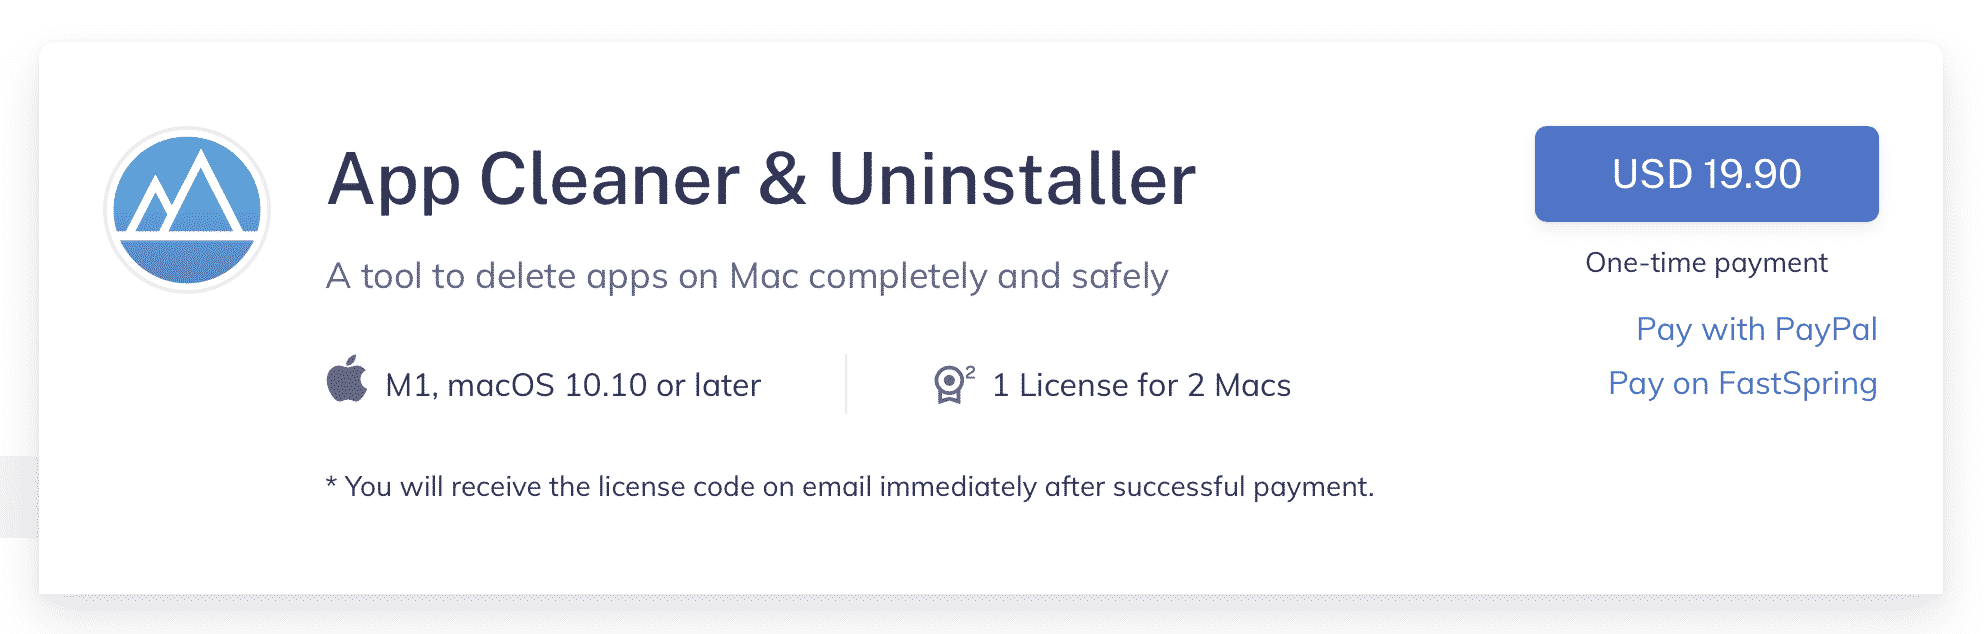 app cleaner and uninstaller mac reddit